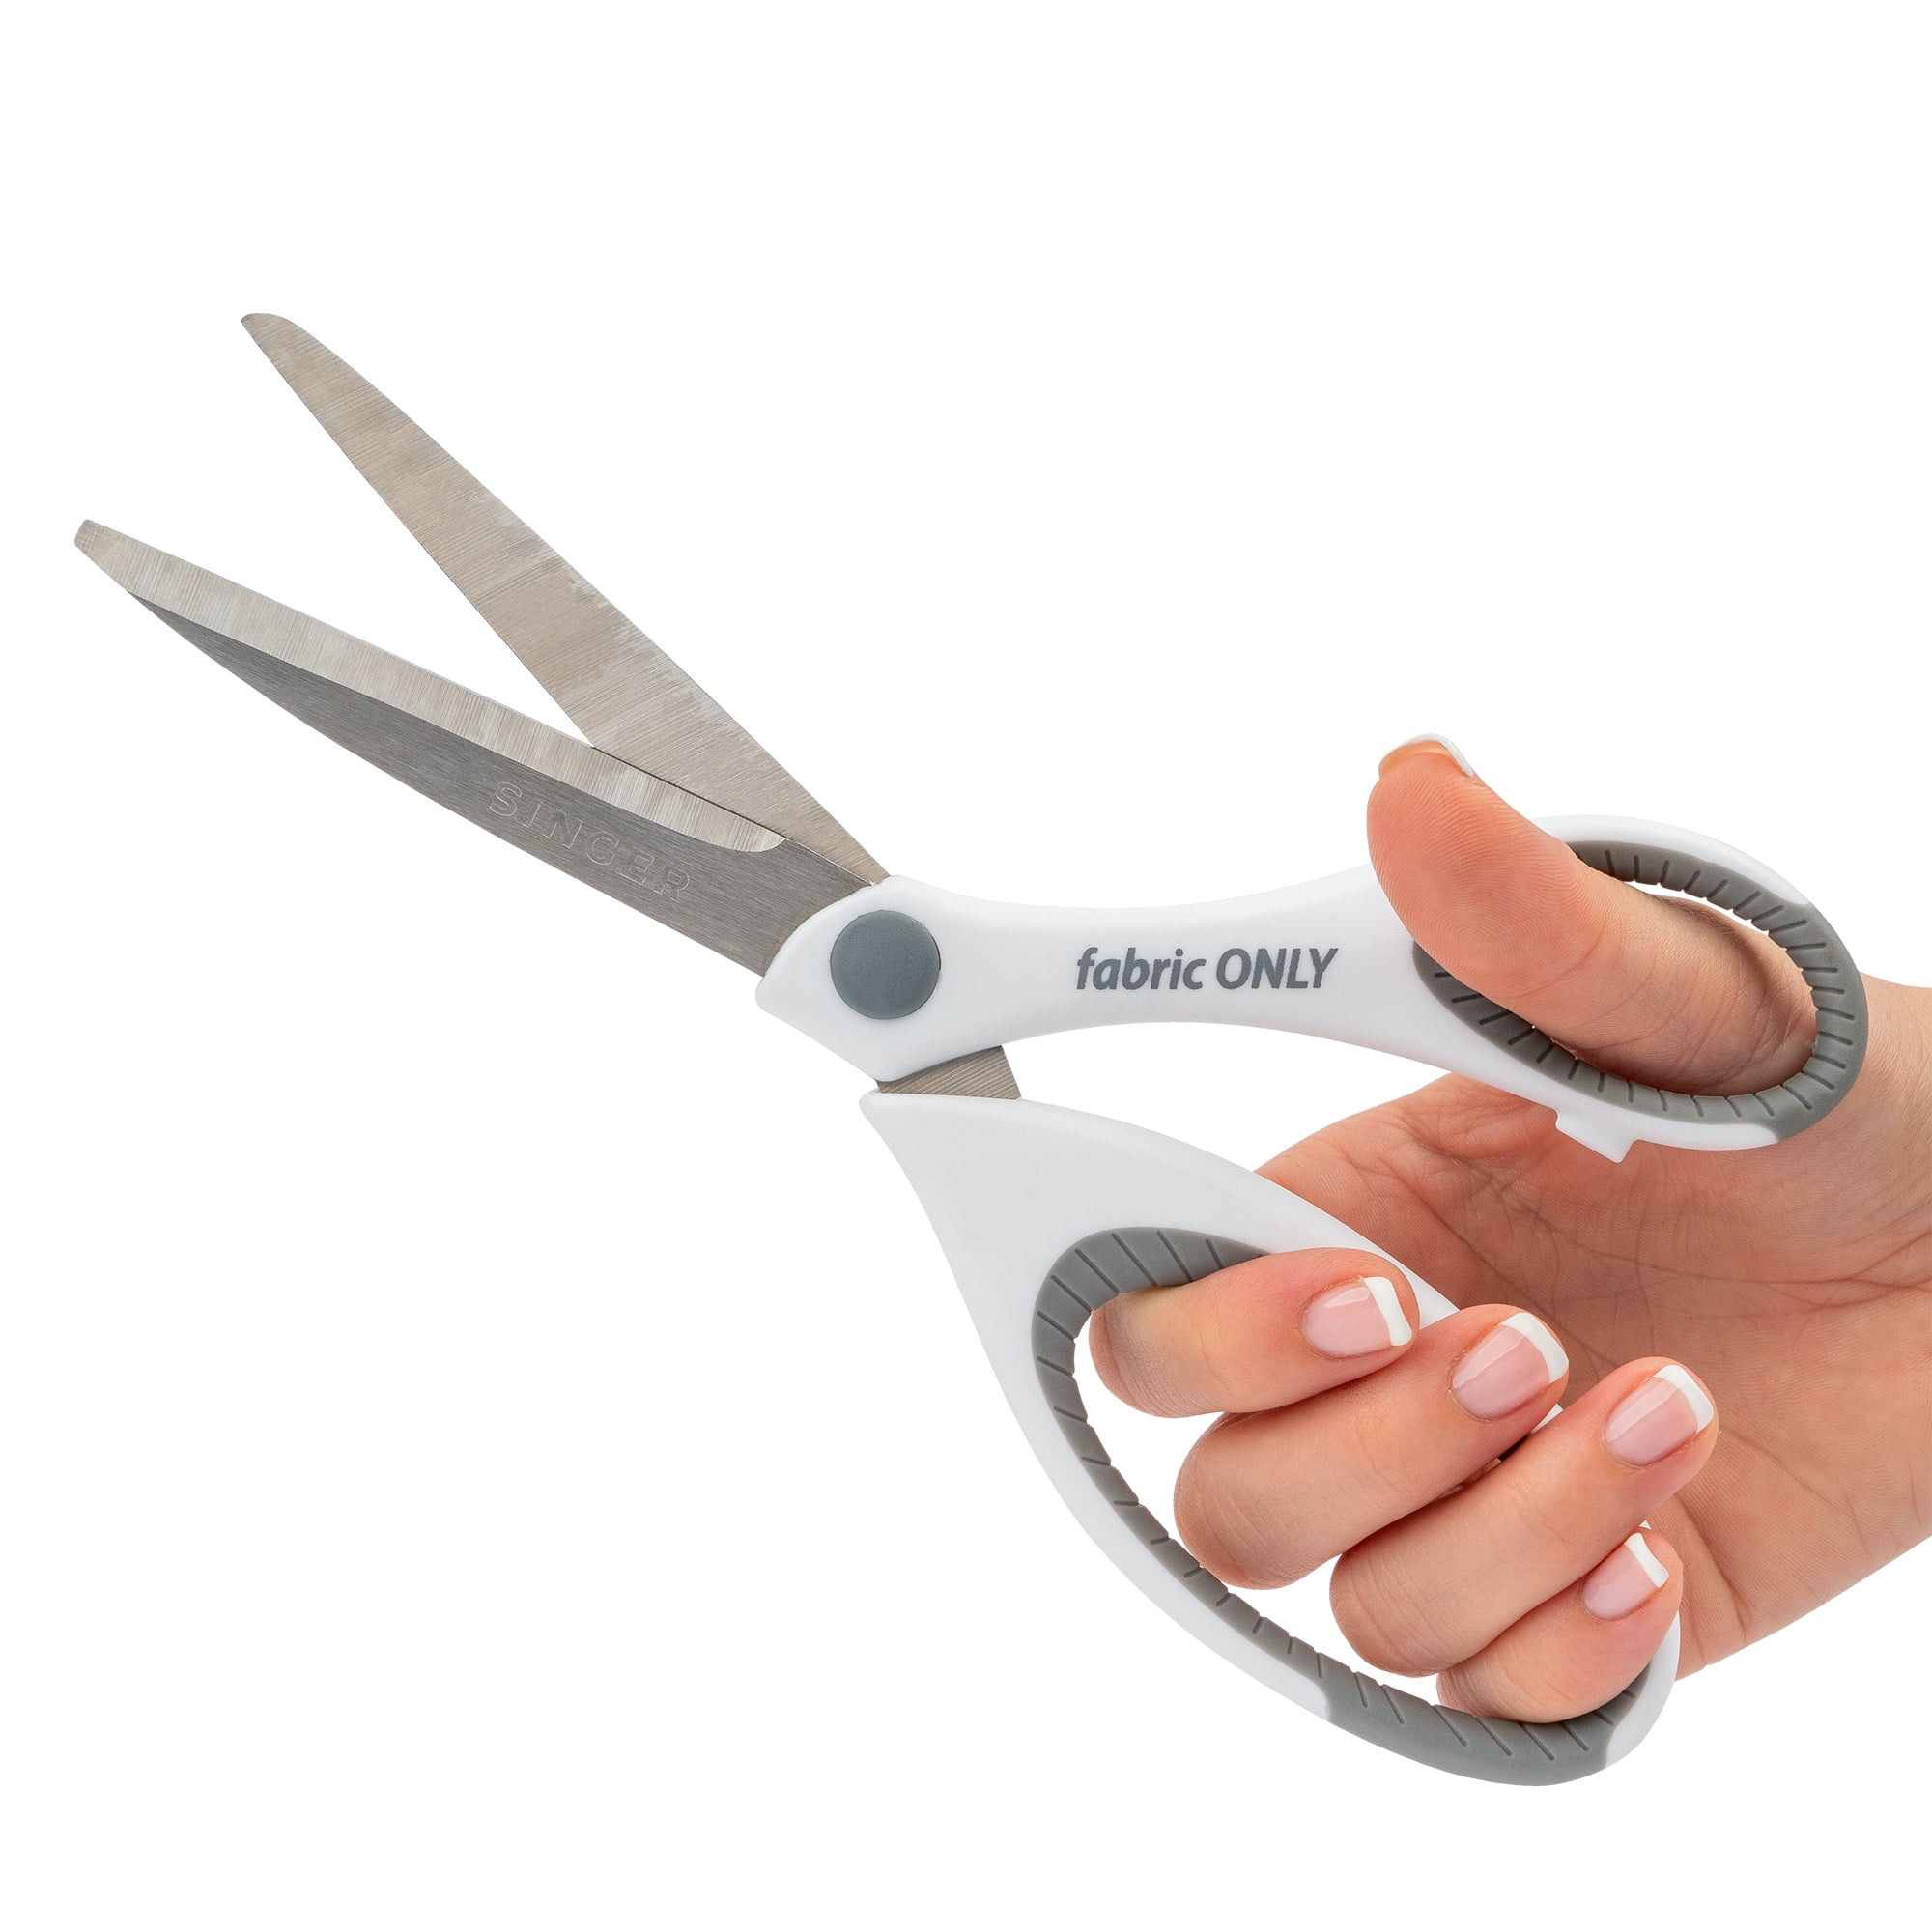 SINGER Heavy Duty Fabric Scissors, 9.5” Dressmaker Shears with Comfort Grip  Handles by Singer | Joann x Ribblr